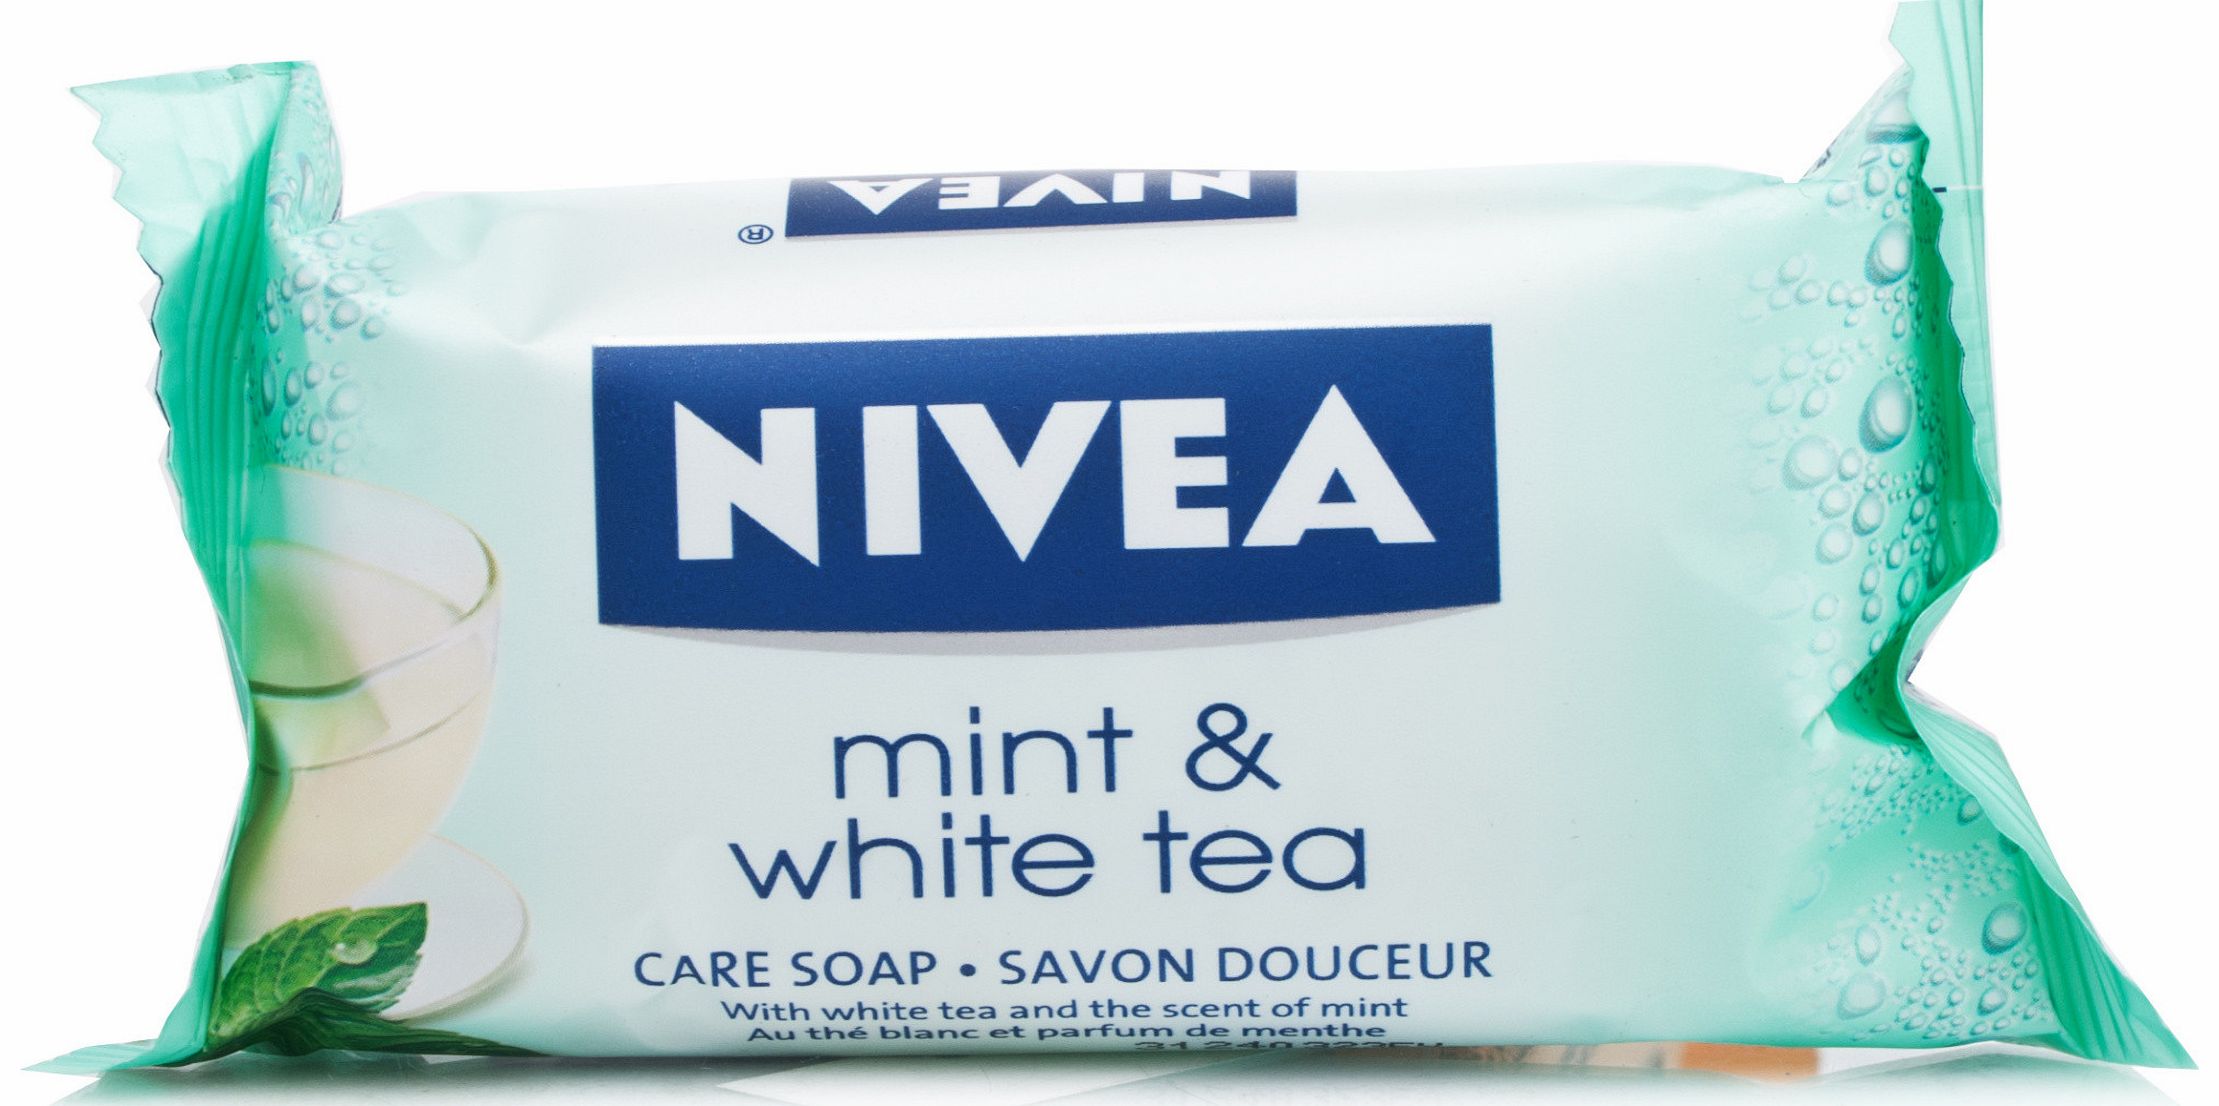 Care Soap Mint & White Tea